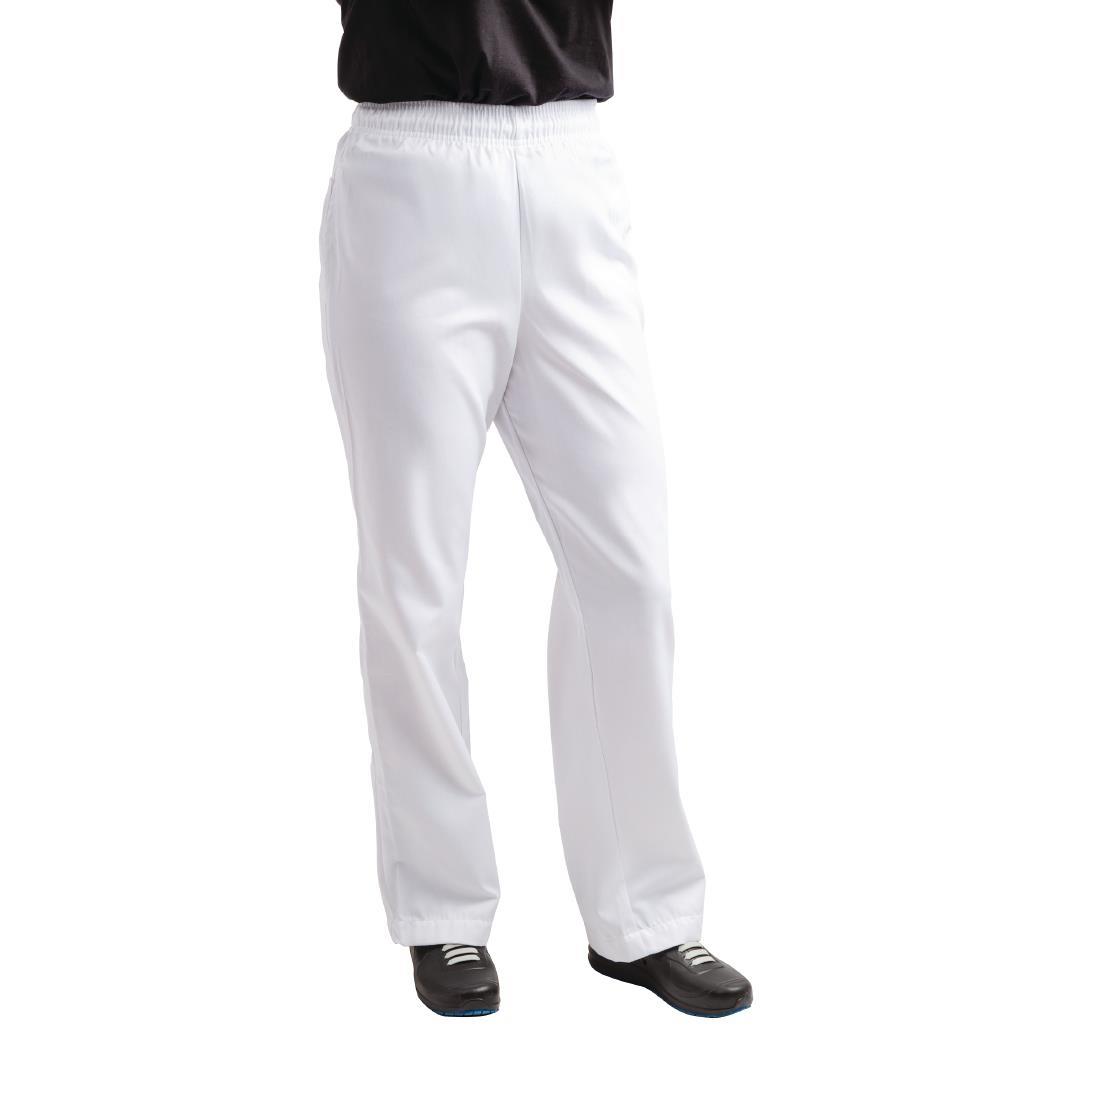 Whites Easyfit Trousers Teflon White S - A575T-S  - 3